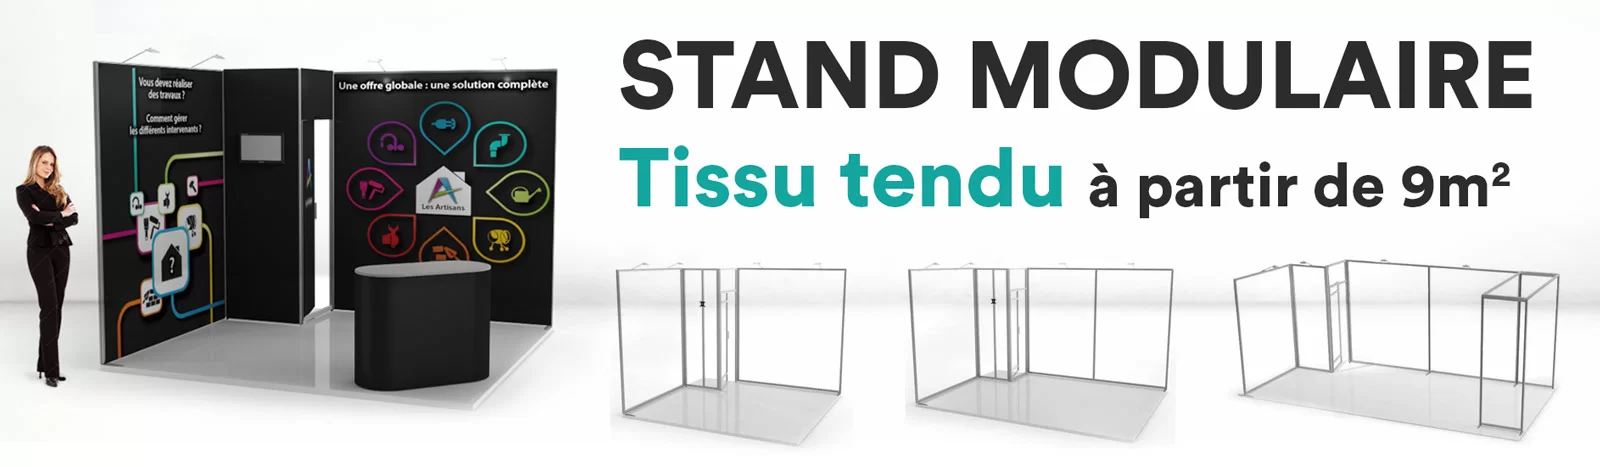 stand modulaire tissu